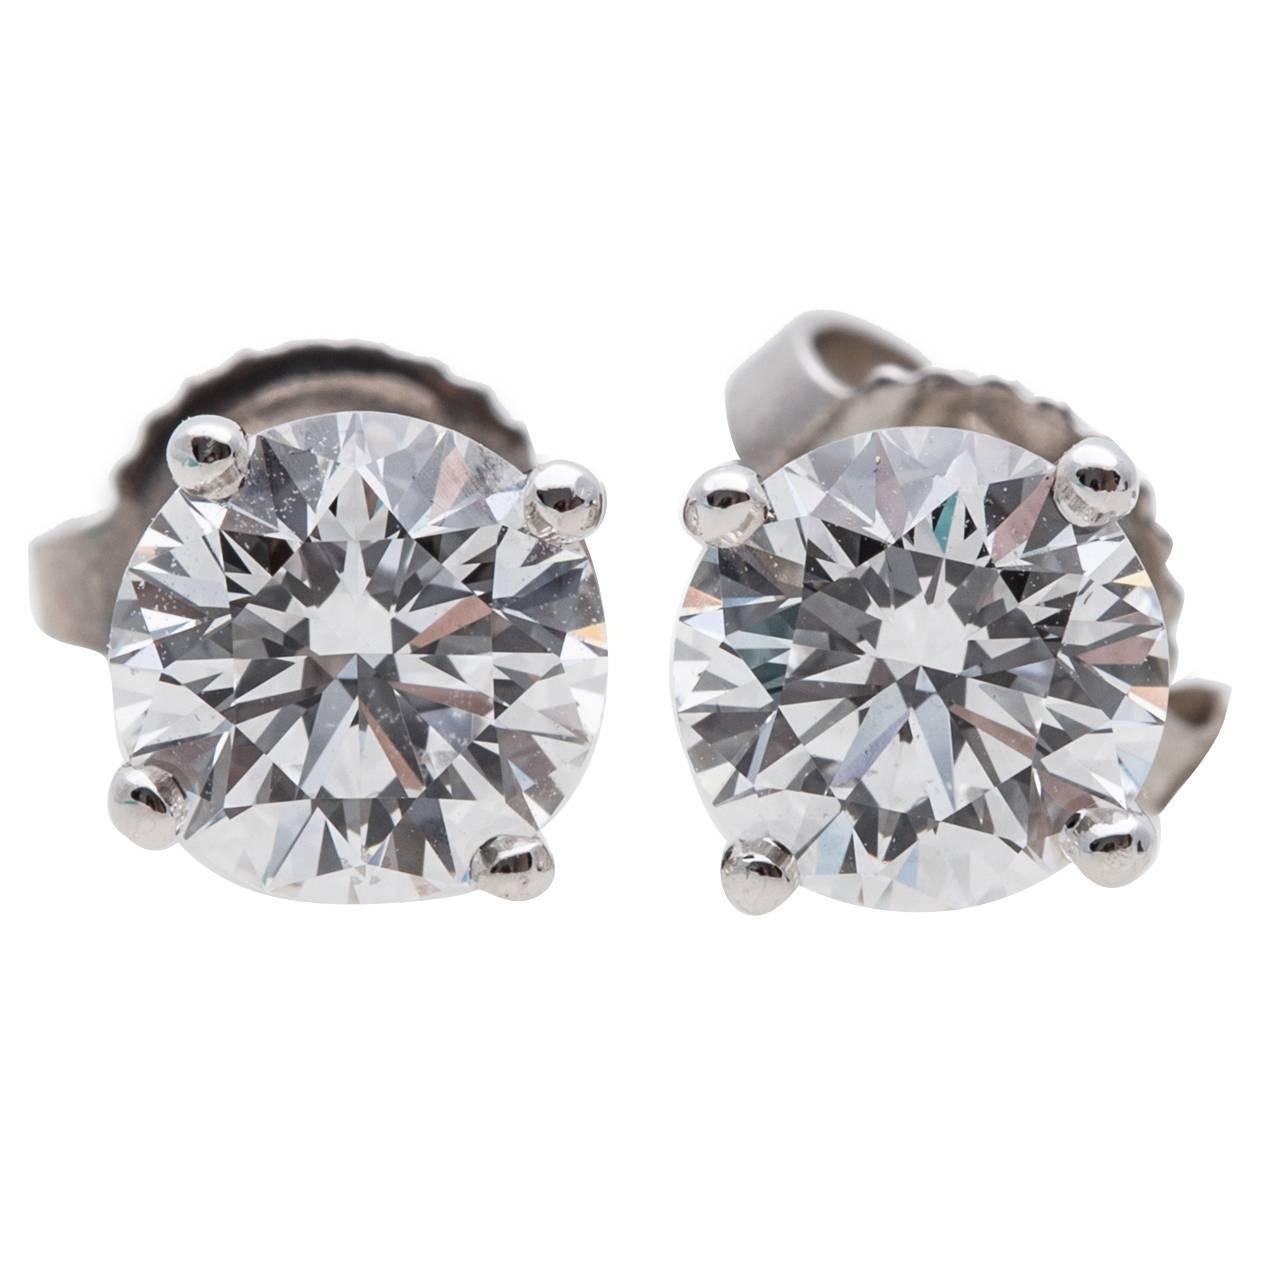 Tiffany & Co. 1.46 Carat Diamond Stud Earrings